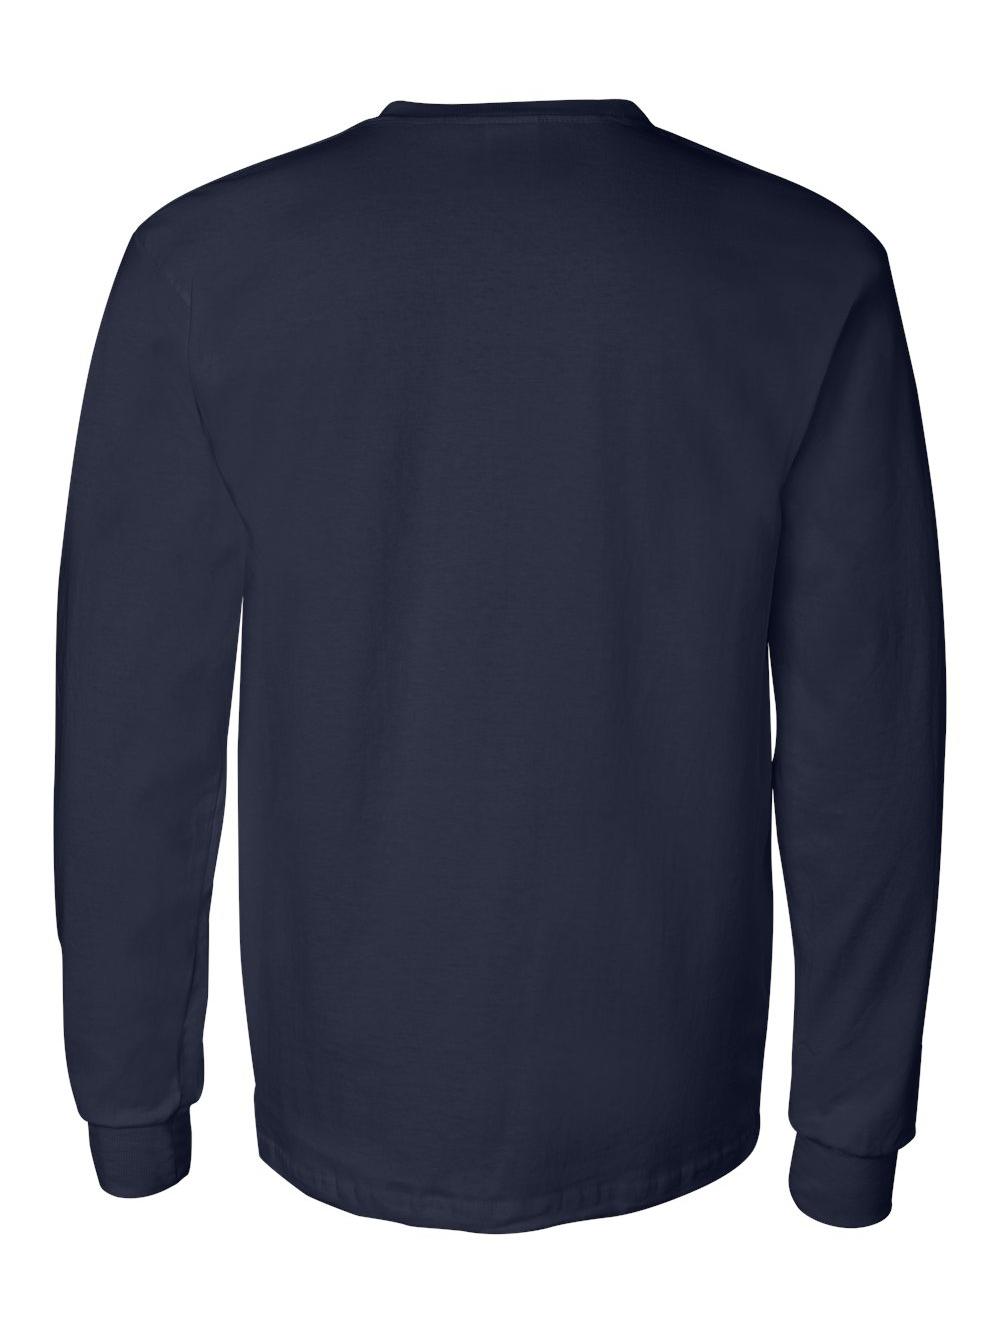 Gildan - Ultra Cotton Long Sleeve Pocket T-Shirt - 2410 - Navy - Size: L - image 3 of 3